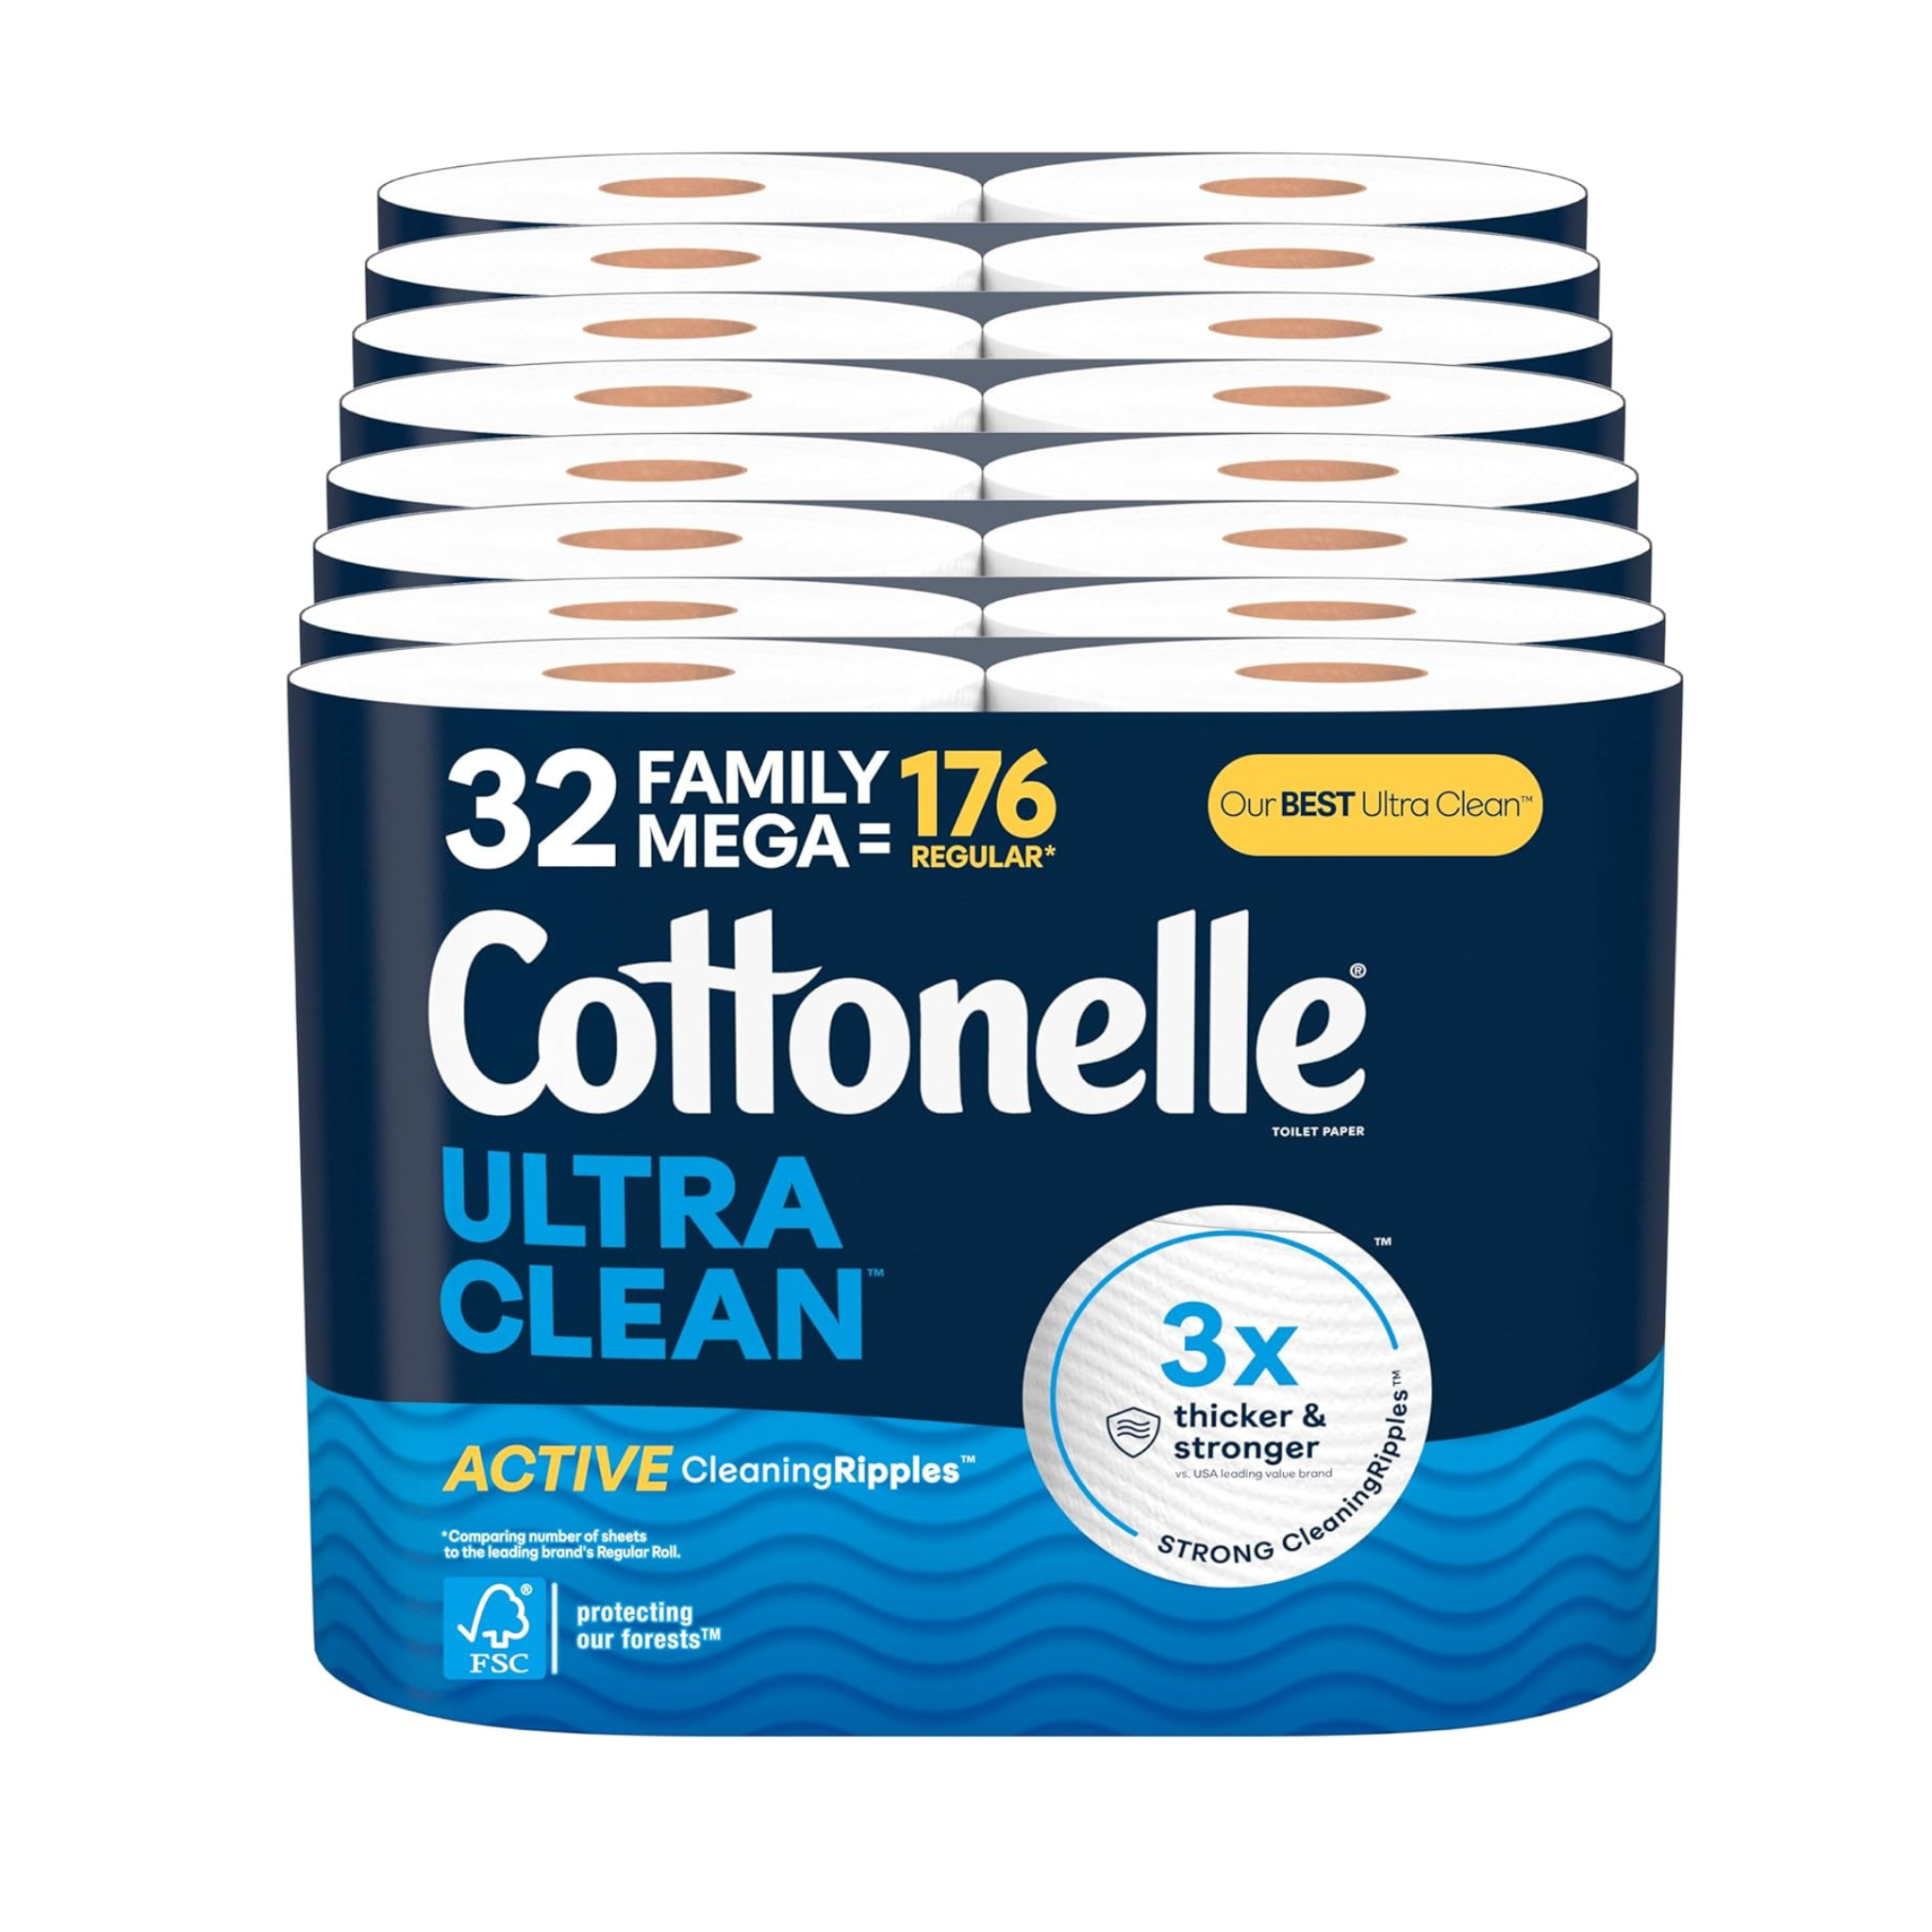 32-Count Cottonelle Ultra Clean Family Mega Rolls Toilet Paper